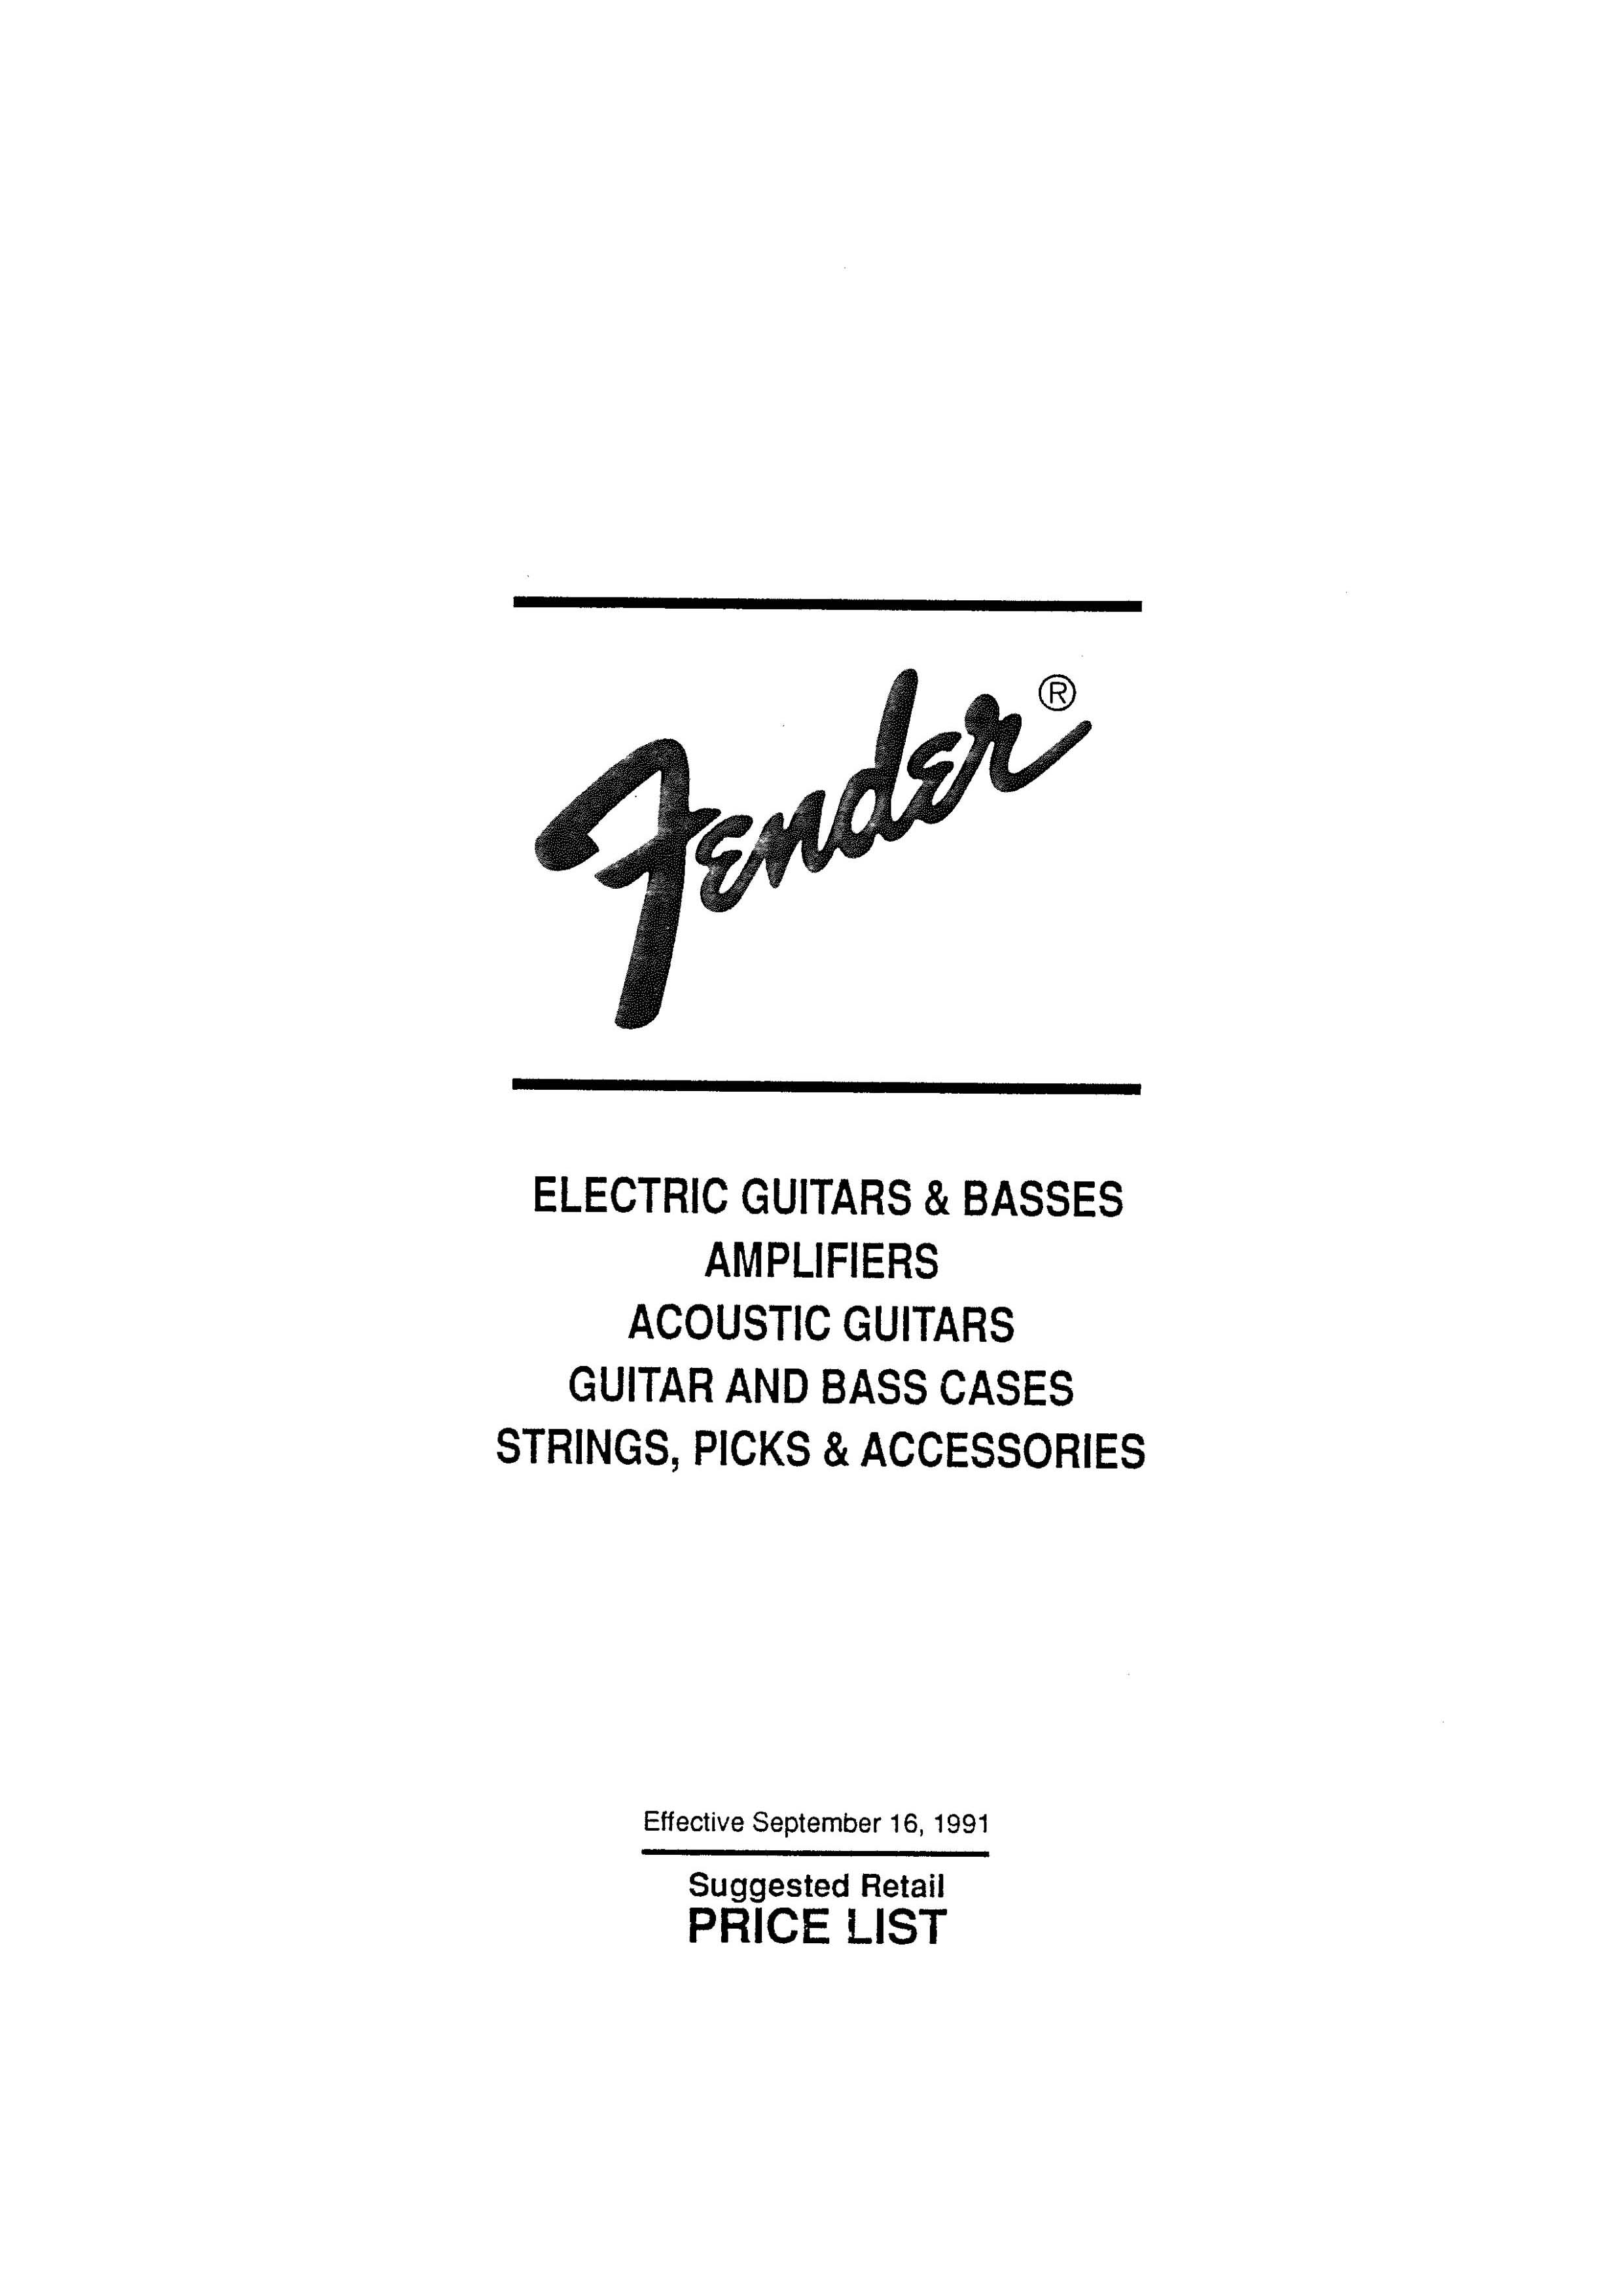 Fender Price list 1991